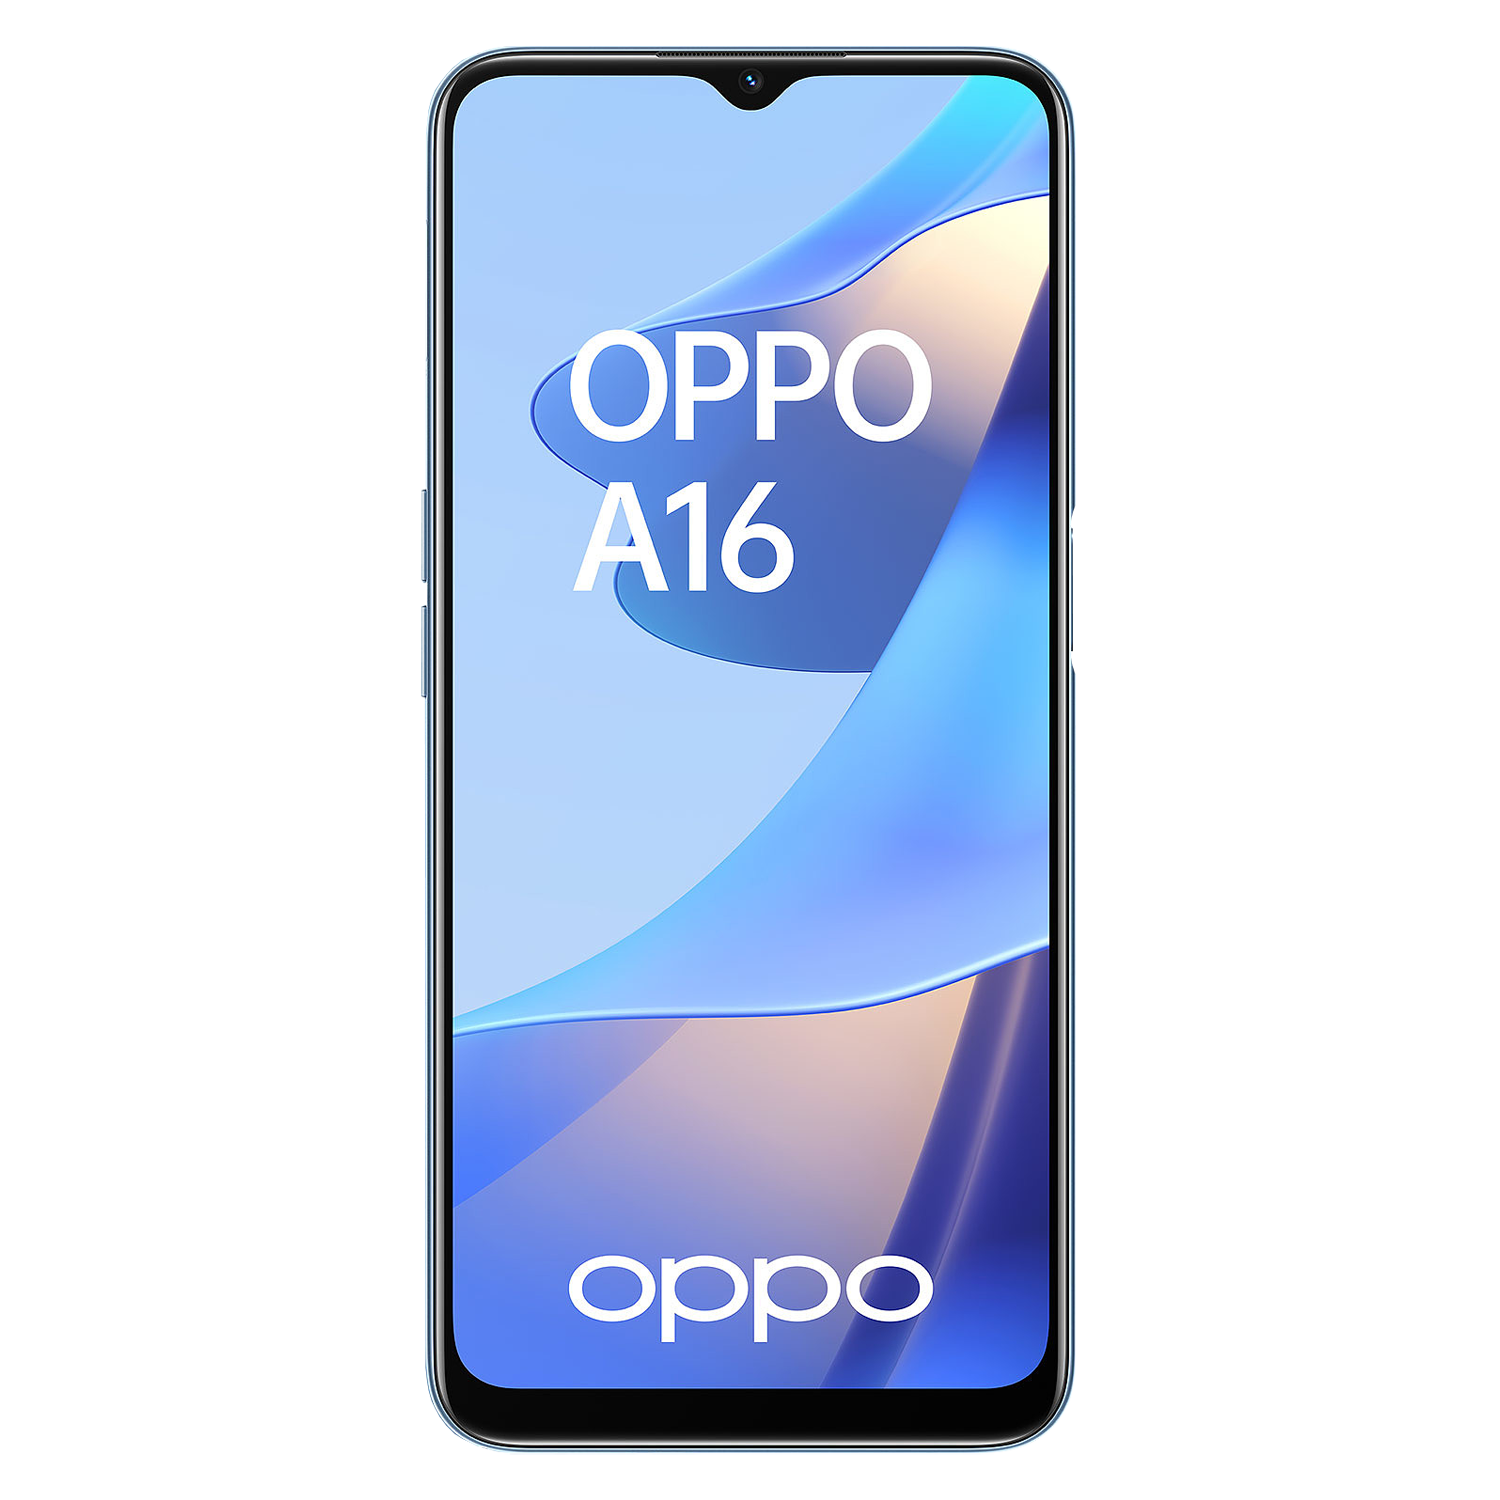 Celular Oppo A16 64GB / 4GB RAM / Dual SIM / Tela 6.52" / Câmeras 13MP+2MP+2MP e 8MP - Pearl Blue 

